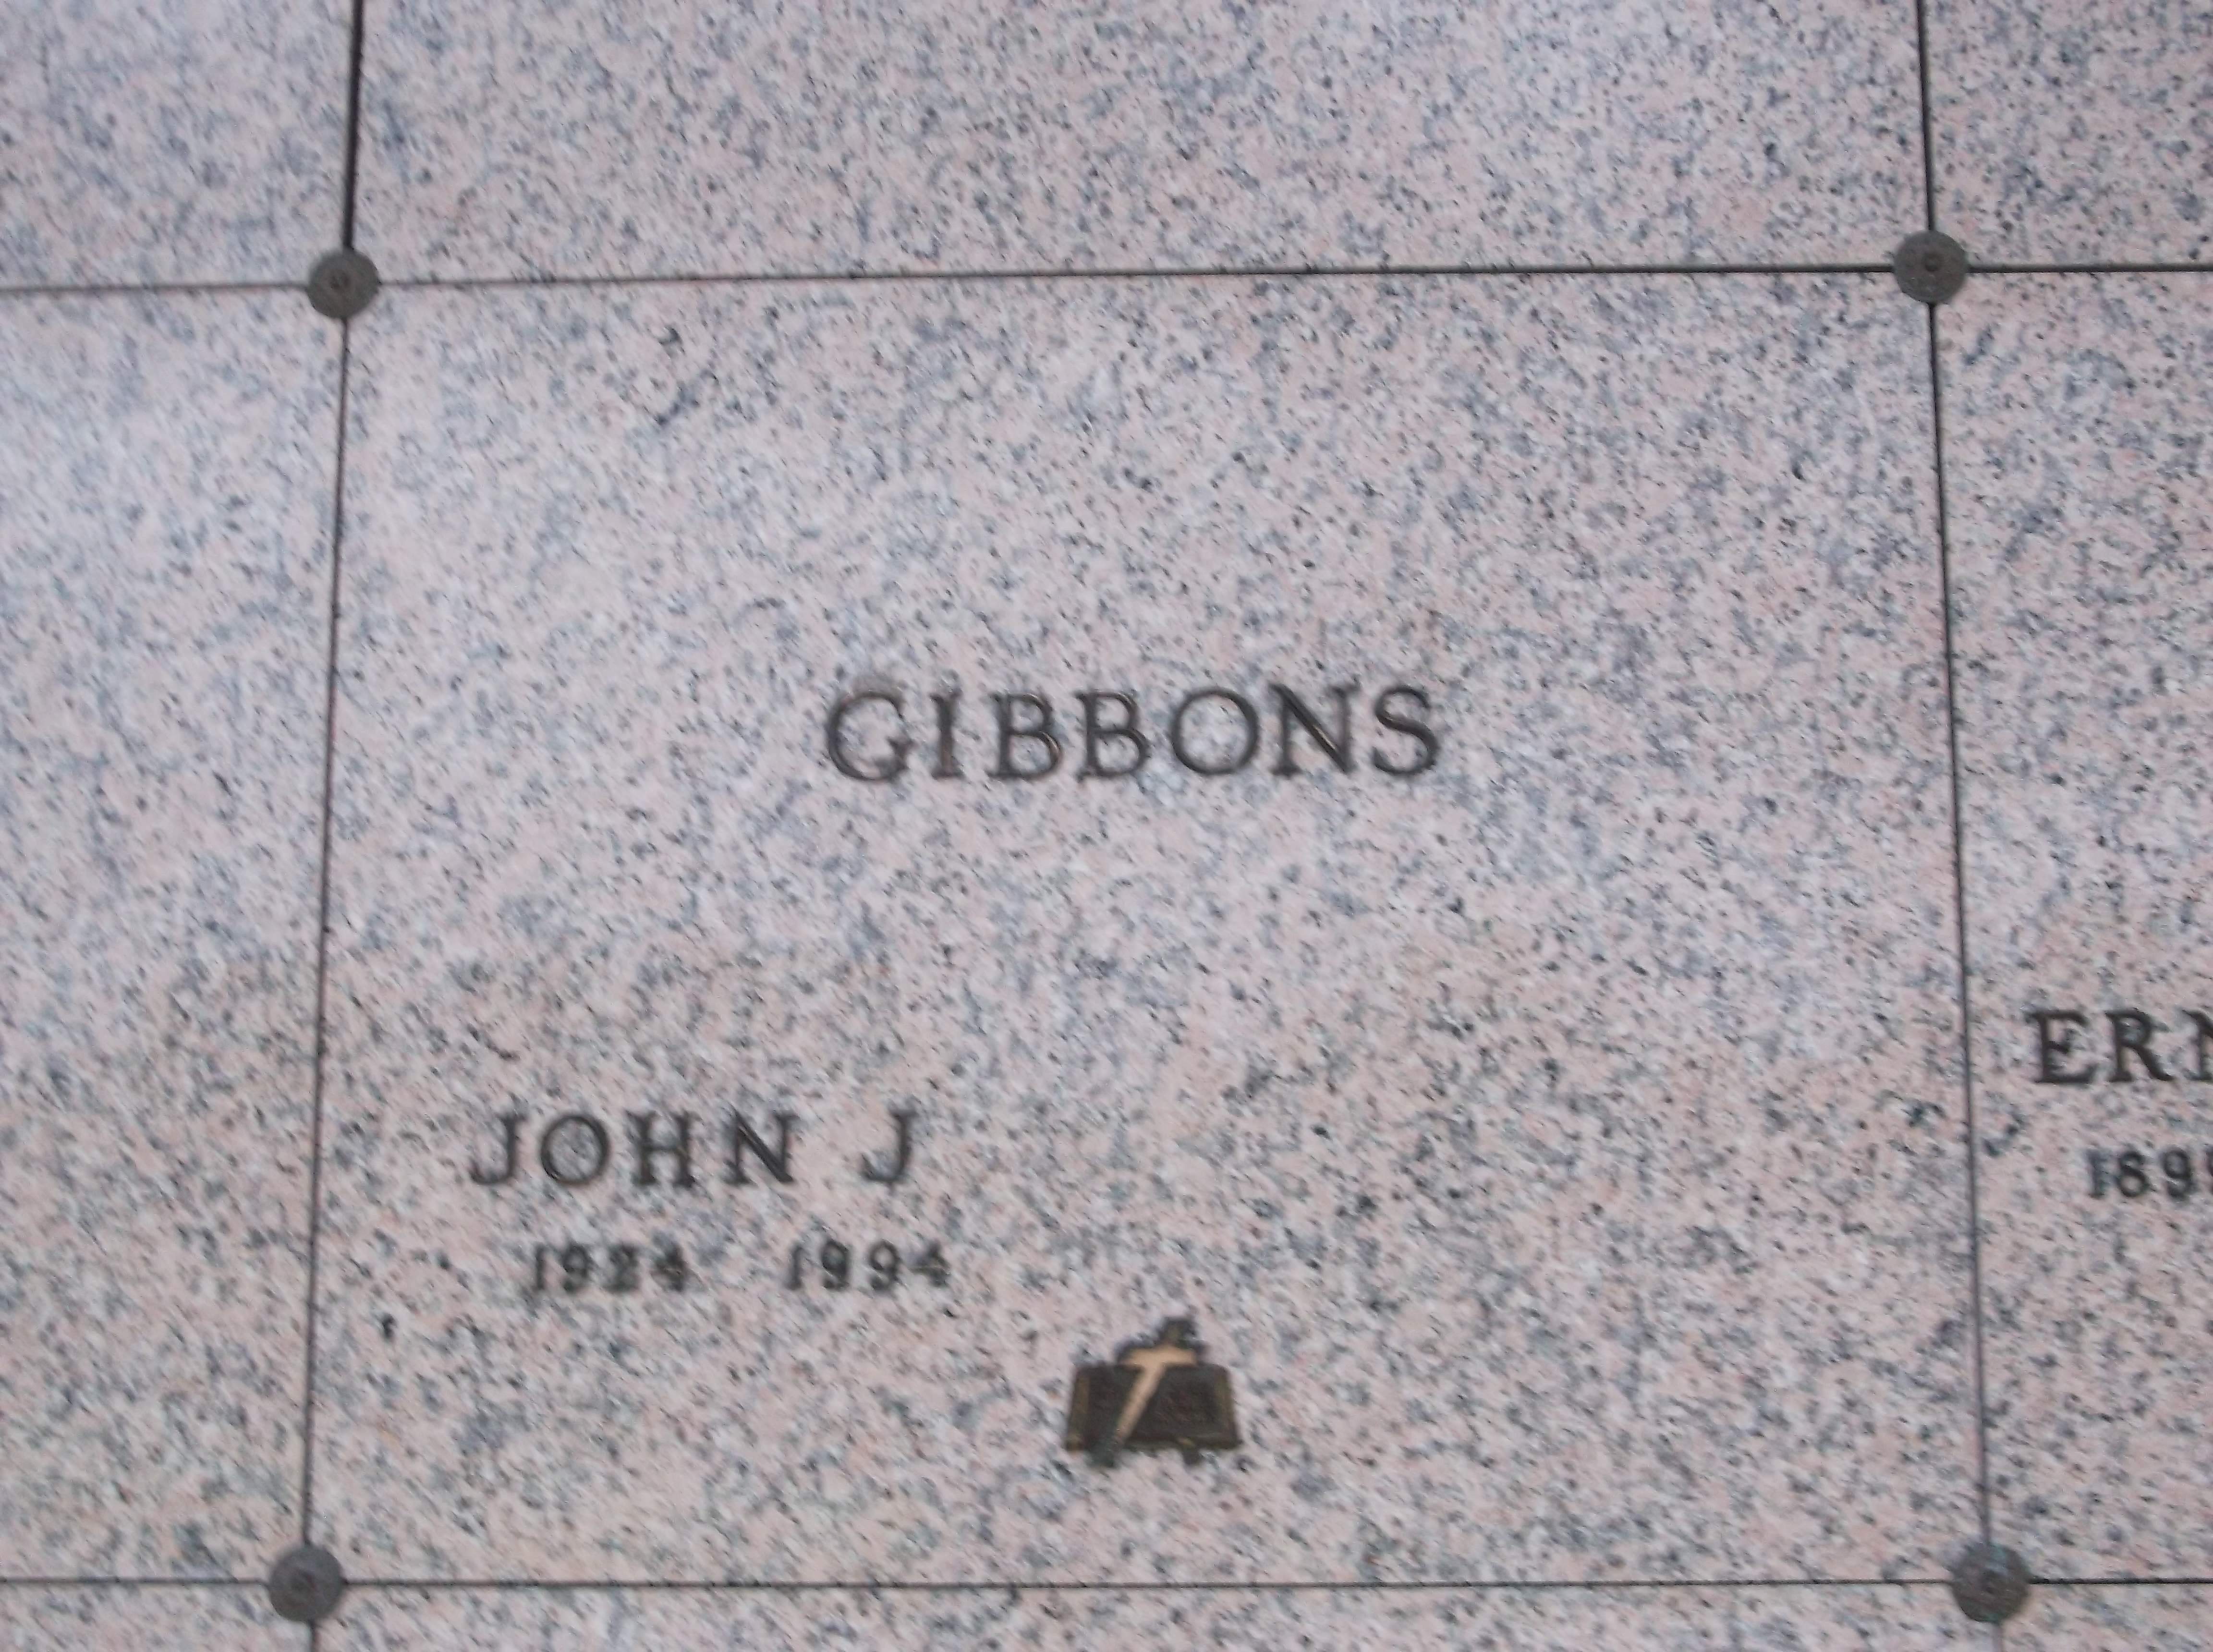 John J Gibbons